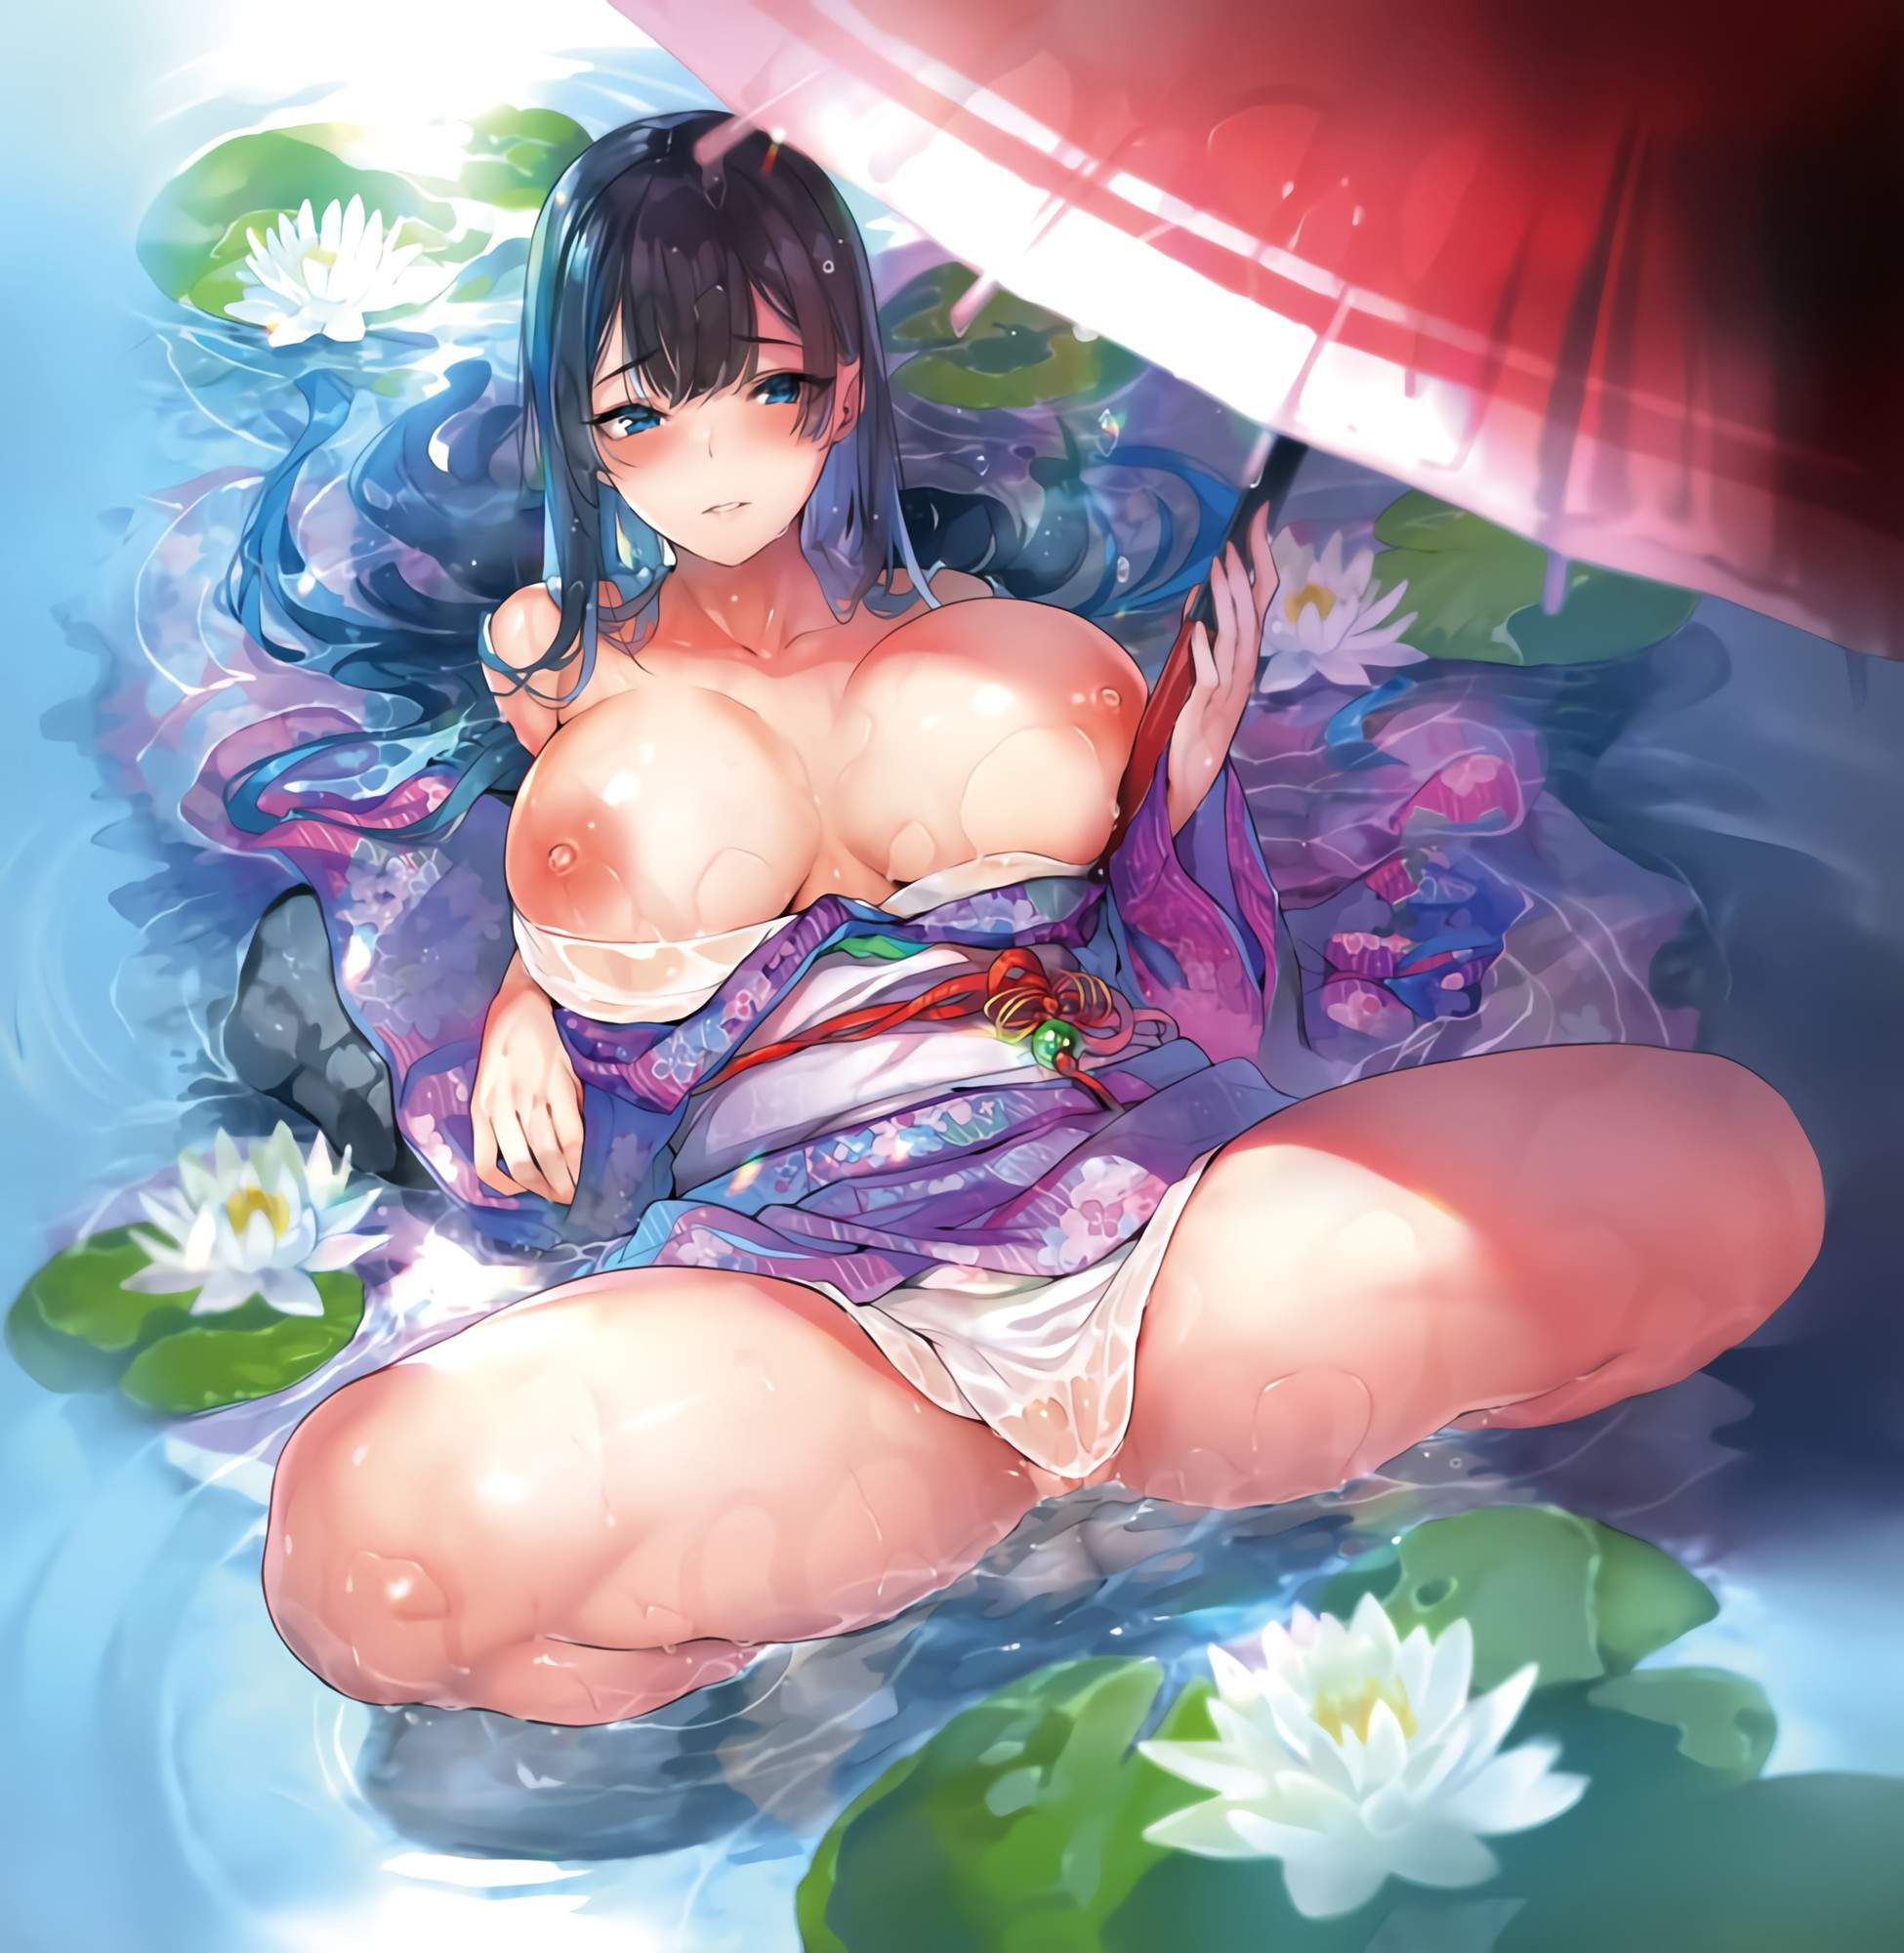 2D erotic image of kimono / yukata. 11